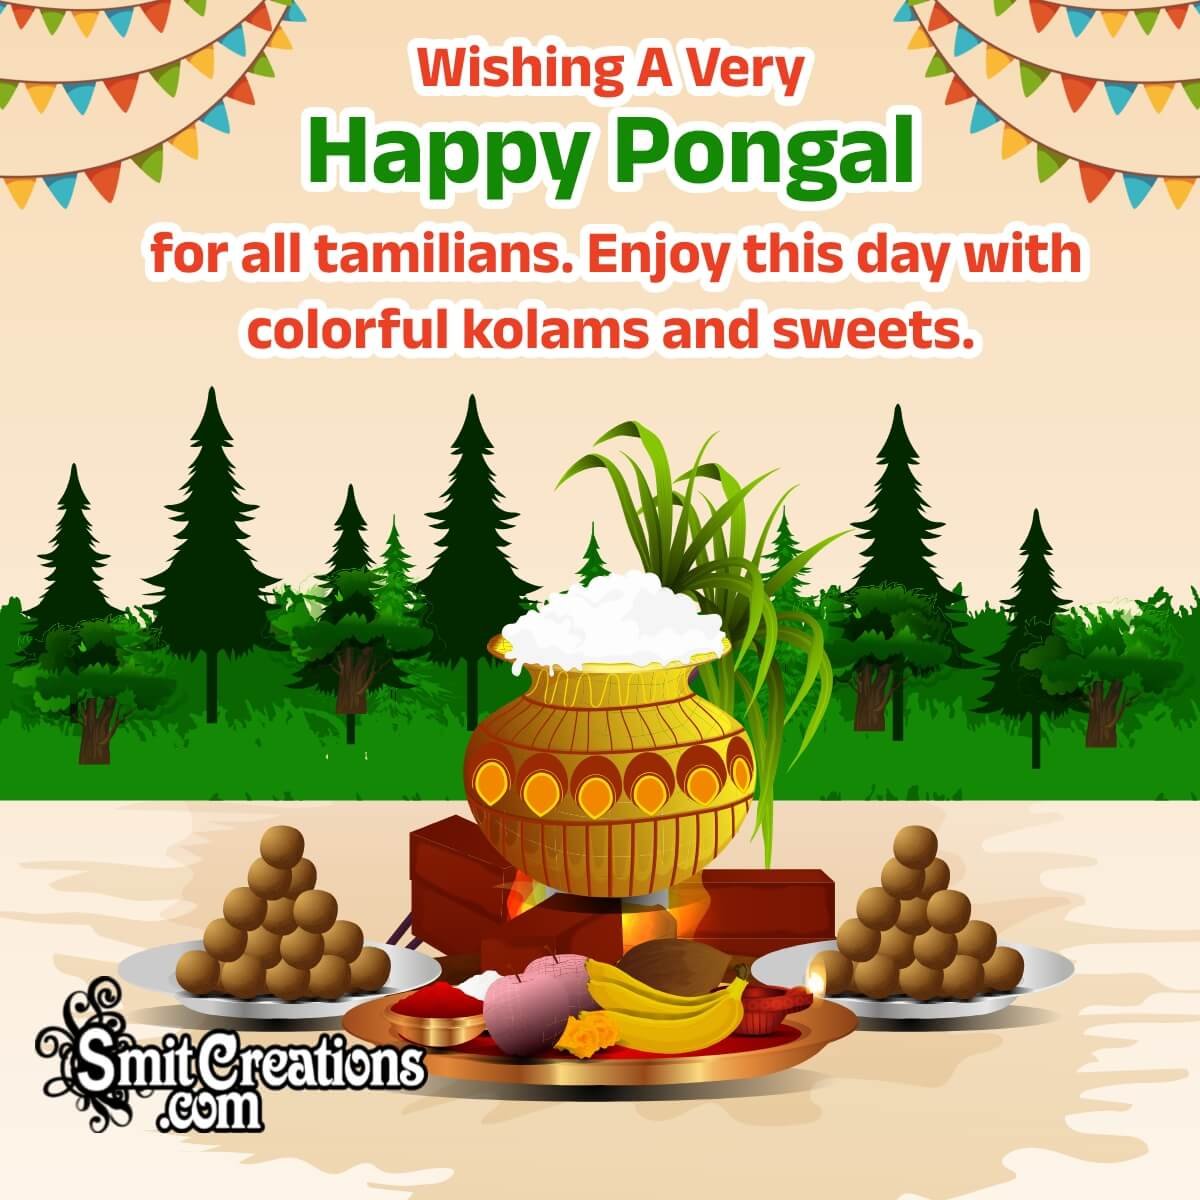 Wishing A Very Happy Pongal